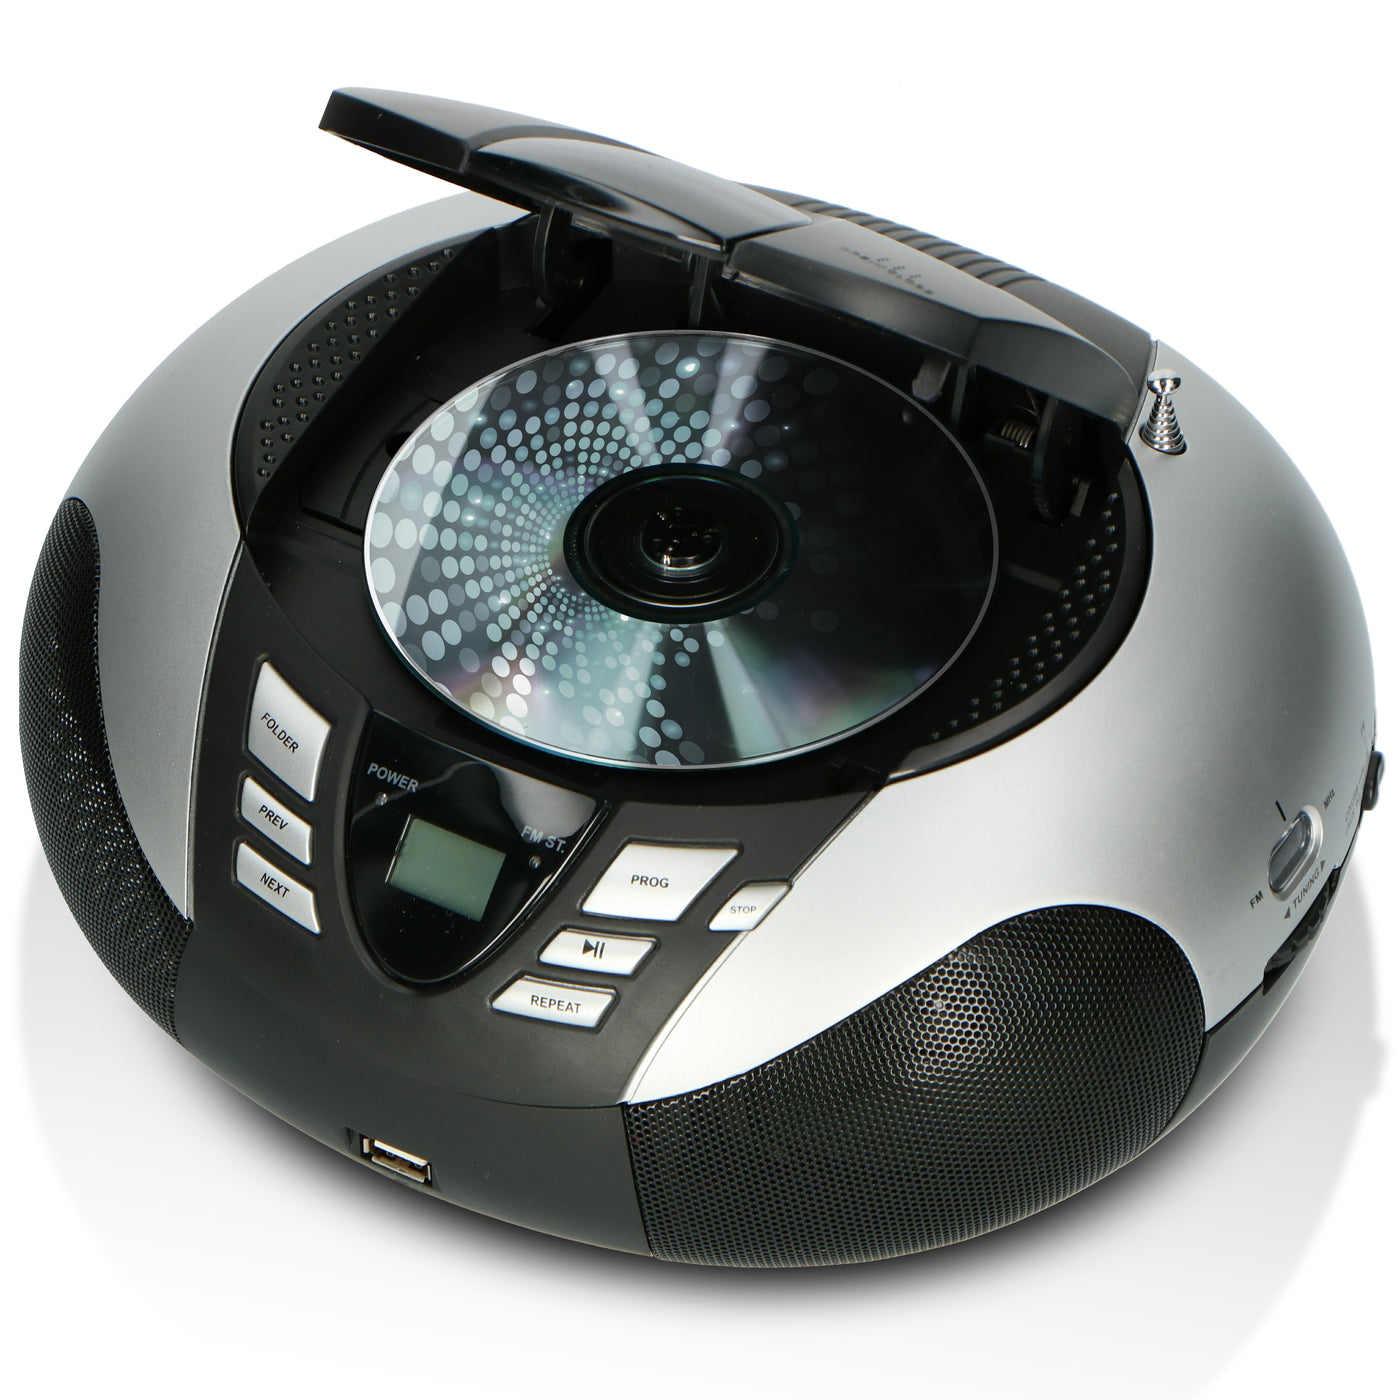 LENCO SCD-37 USB Silver - Portable FM Radio CD and USB player - Silver